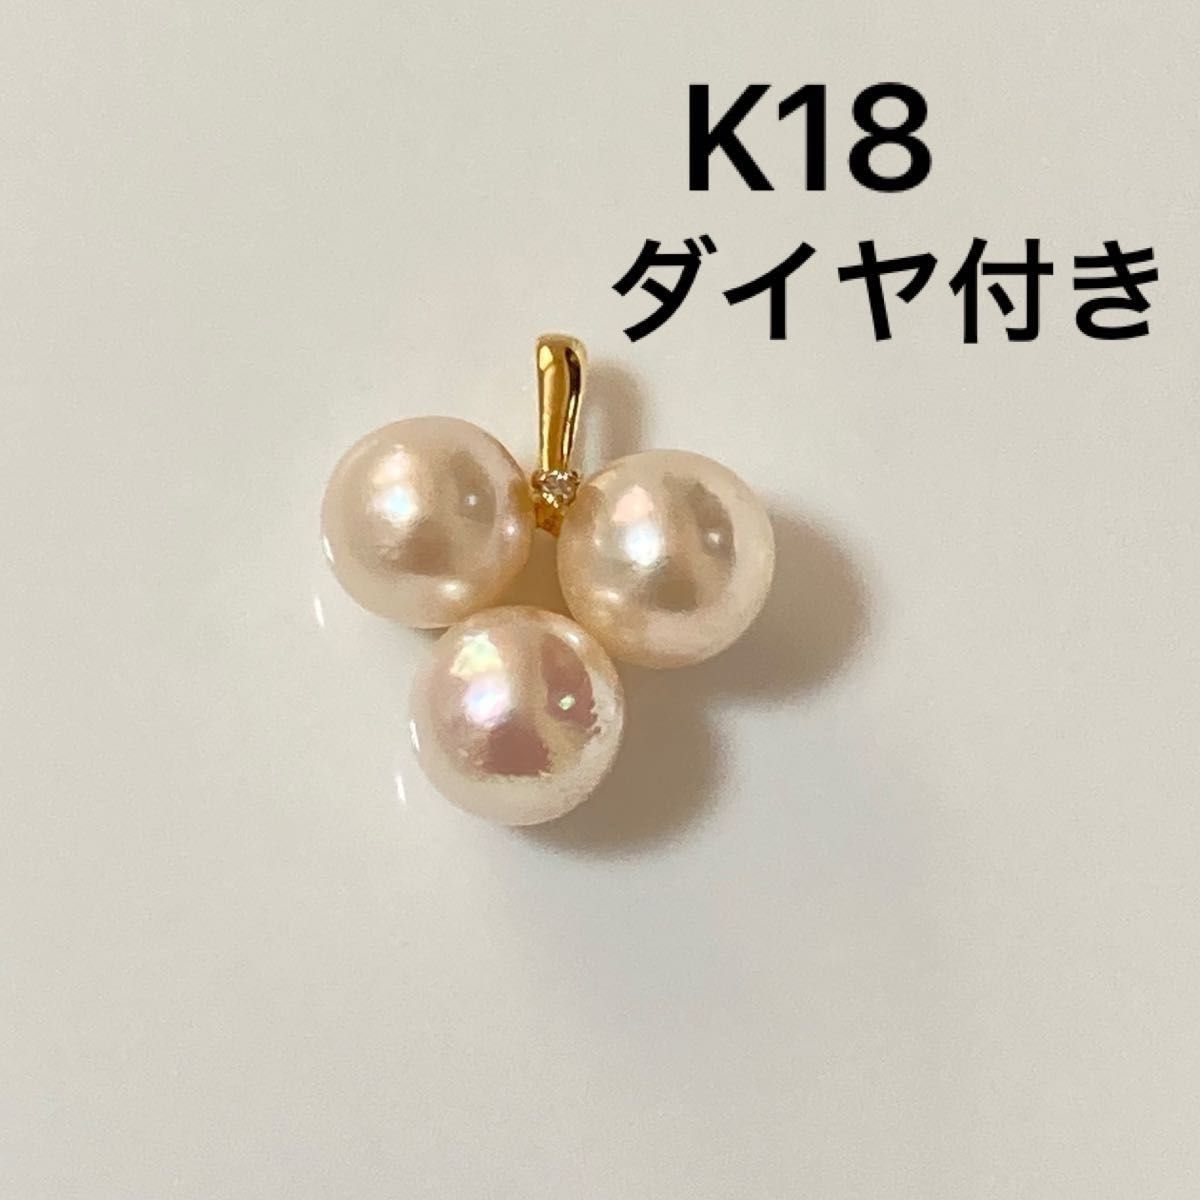 k18 真珠のぶどうペンダントトップ - チャーム